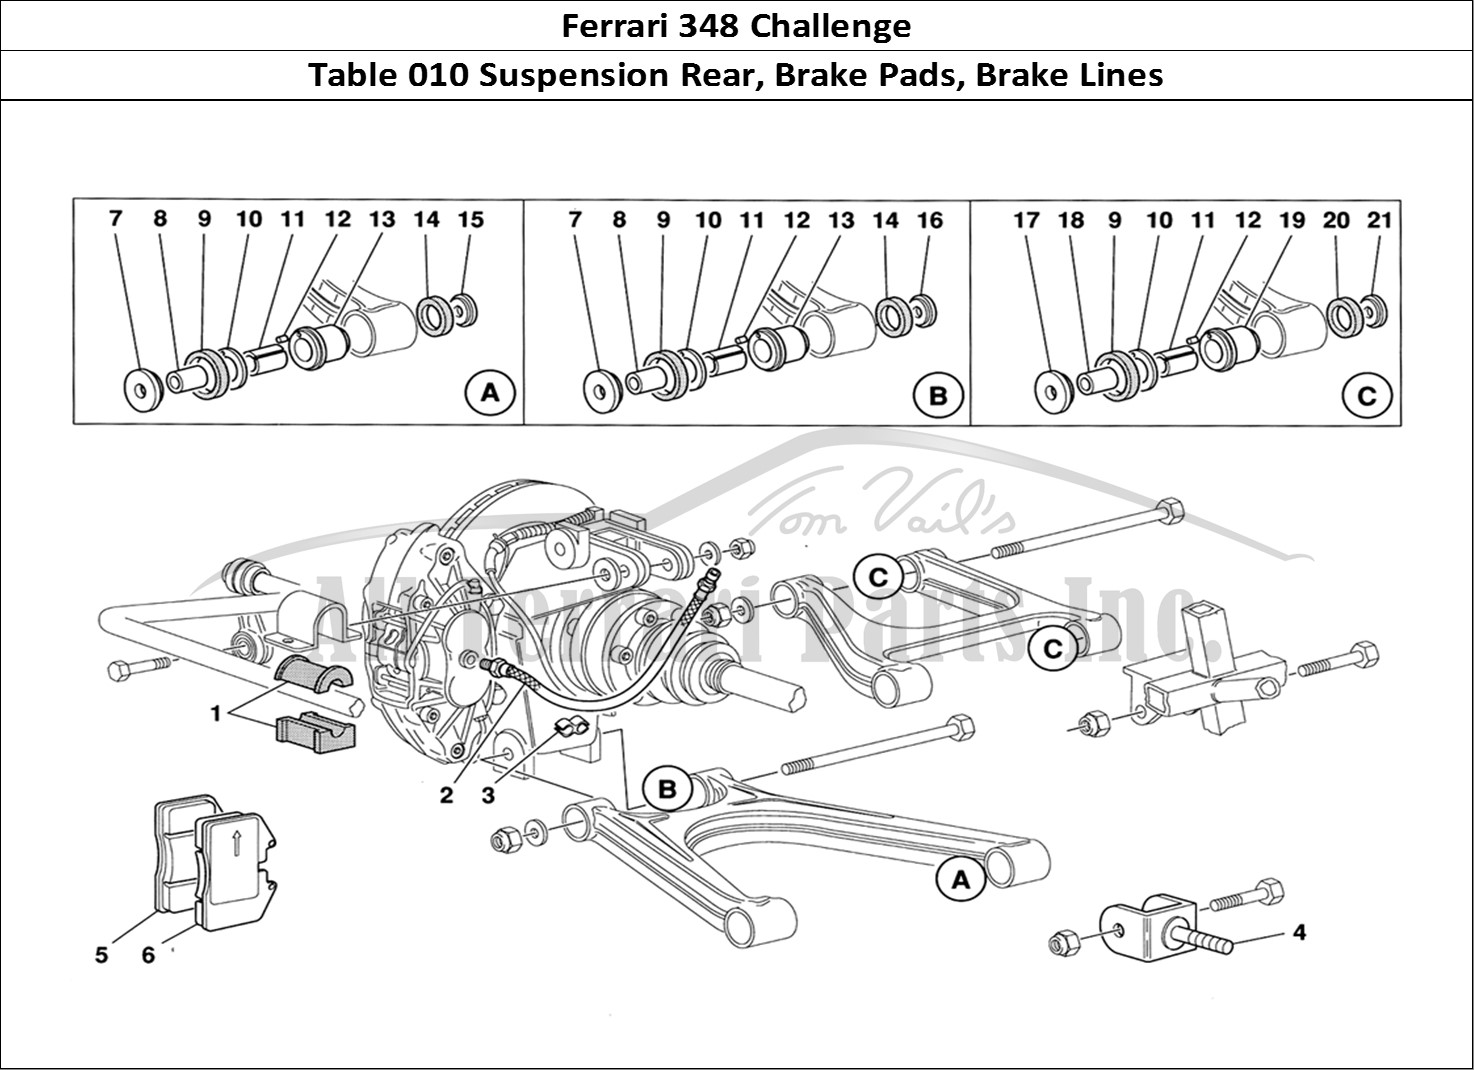 Ferrari Parts Ferrari 348 Challenge (1995) Page 010 Rear Suspension Pads and